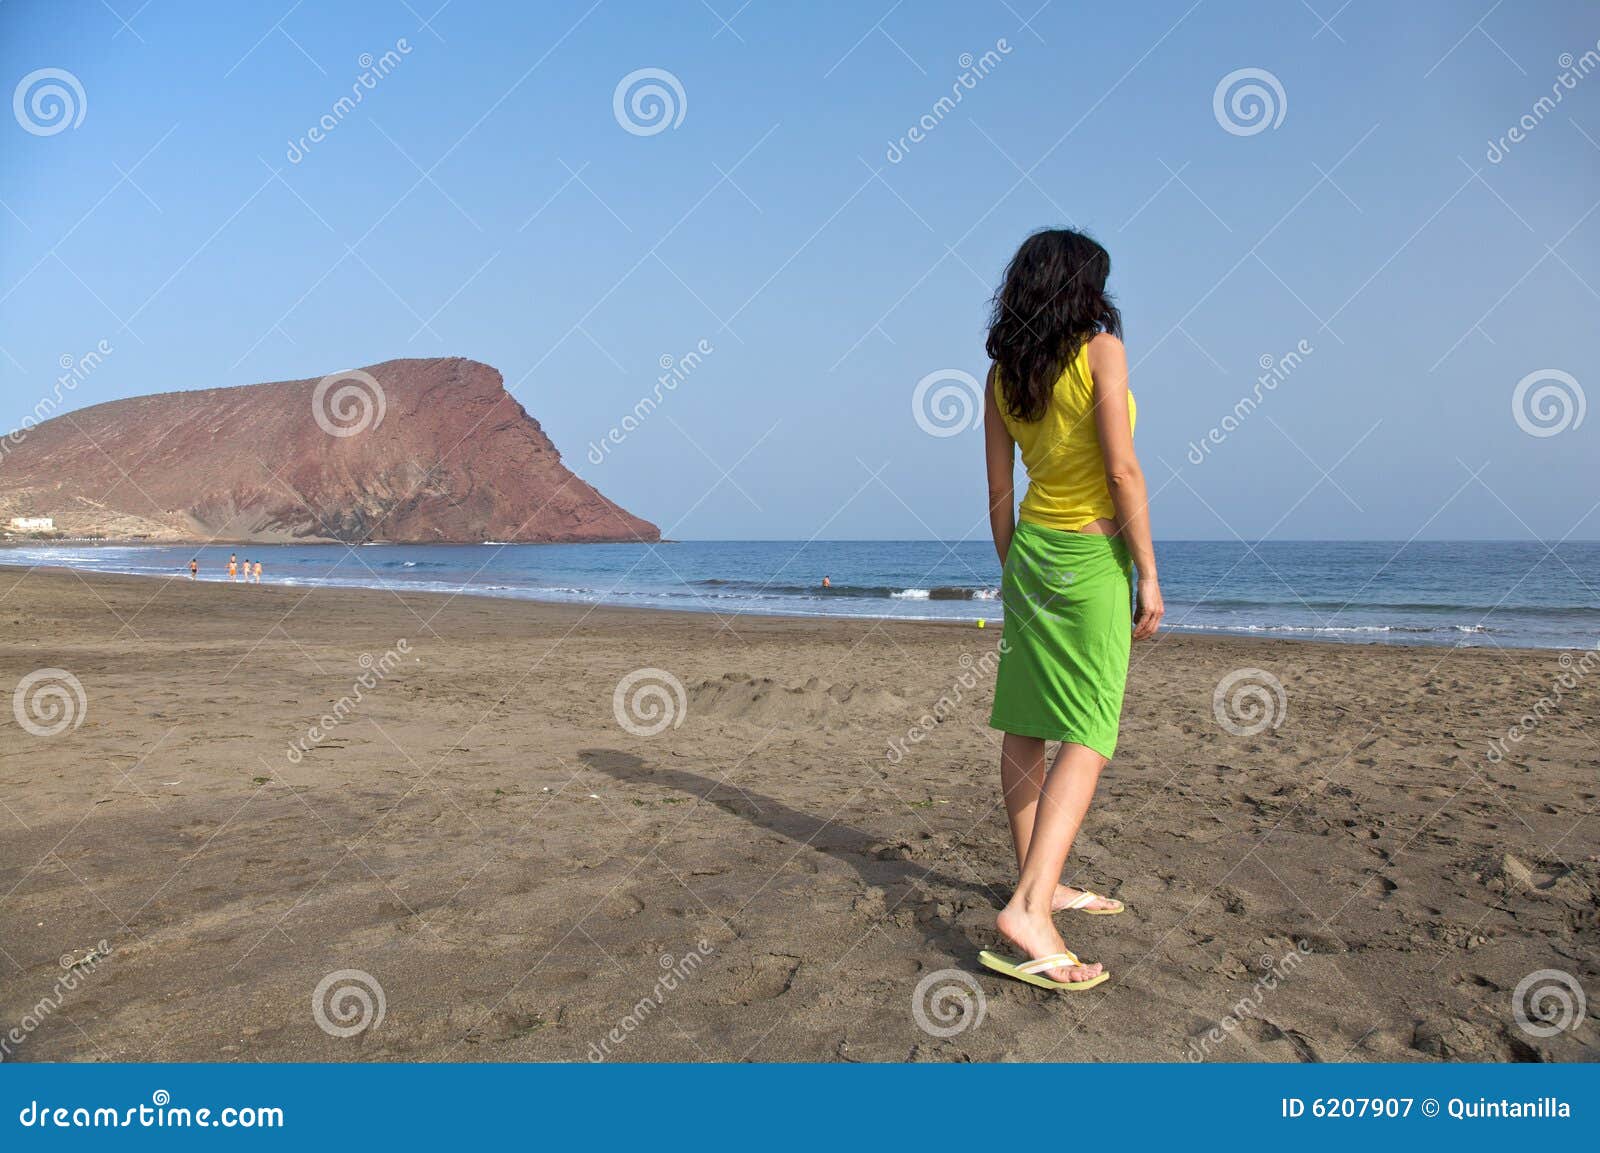 woman at tejita beach